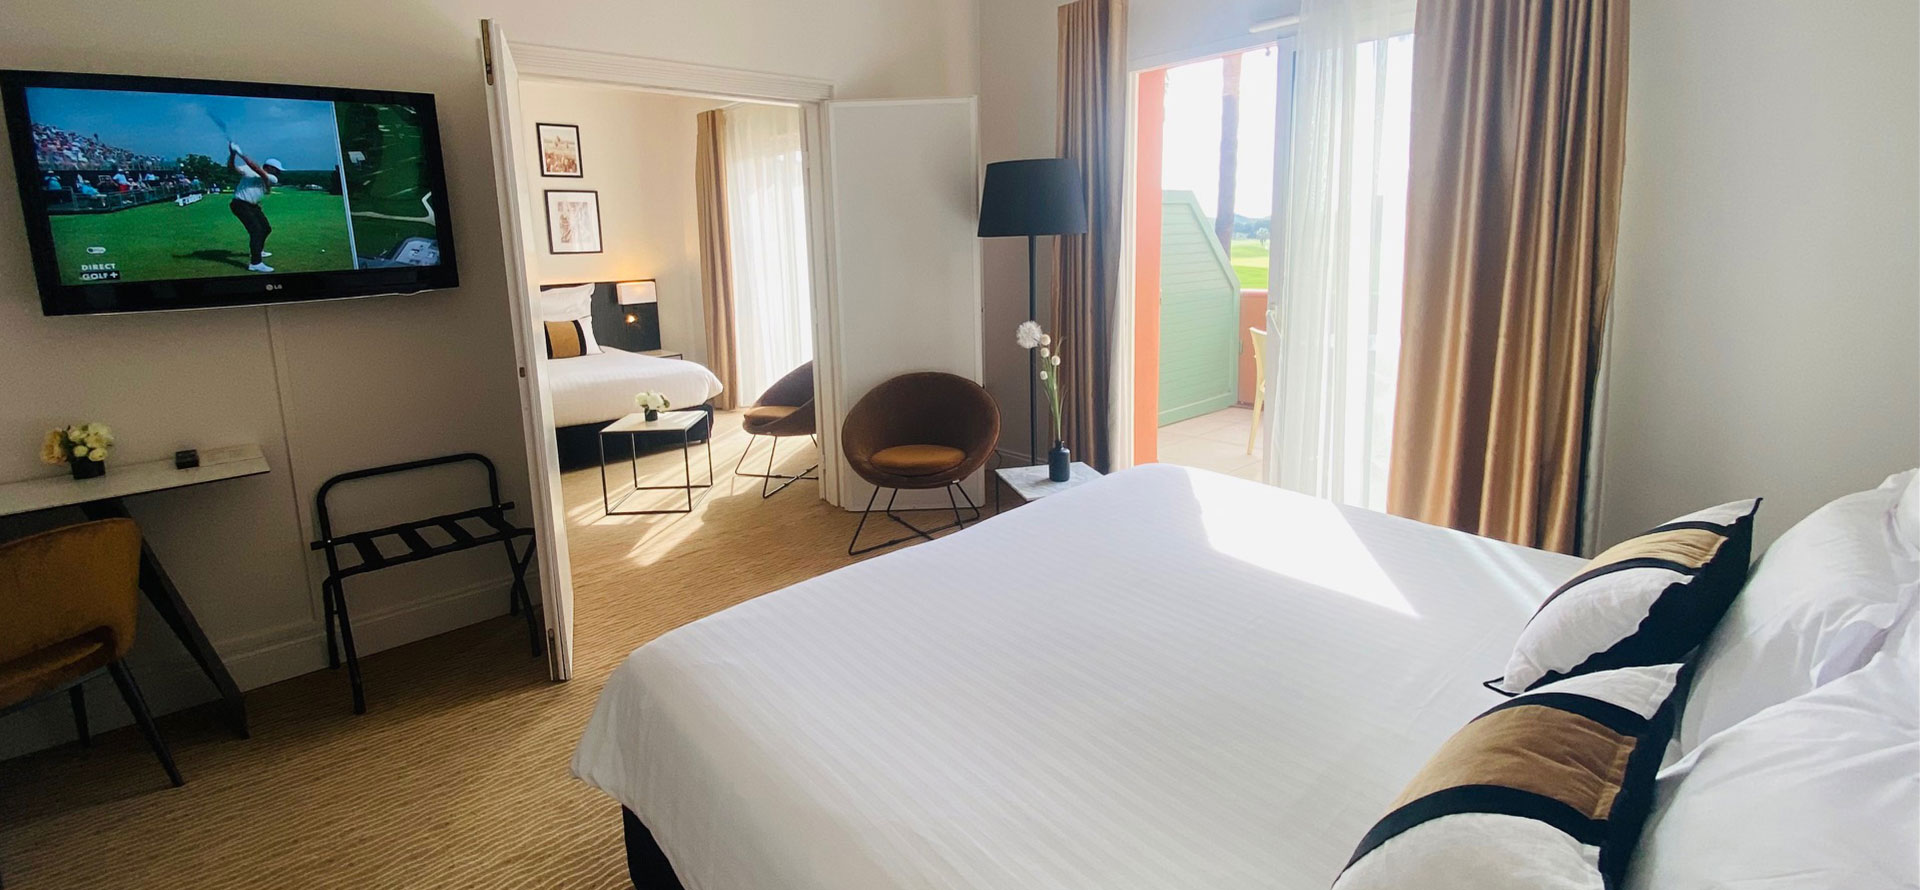 Habitación comunicada con terraza privada en Palmyra Golf, hotel de 4 estrellas en Hérault con cama